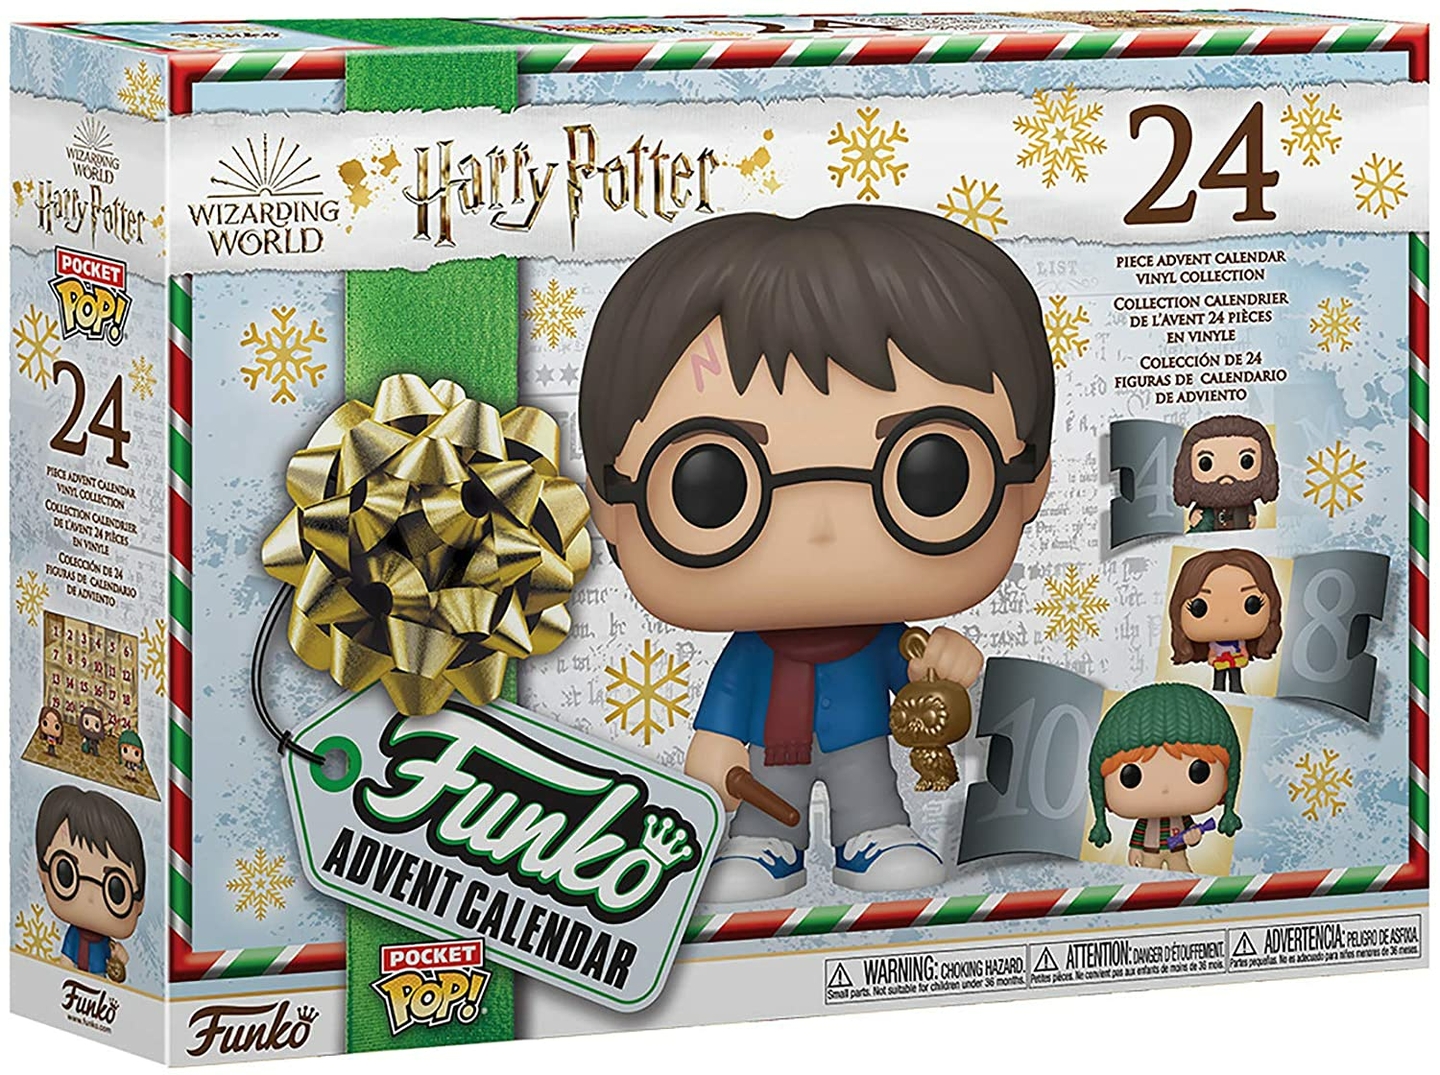 Harry Potter Pocket Pop Calendrier de l'avent 2020 "24 figurines"